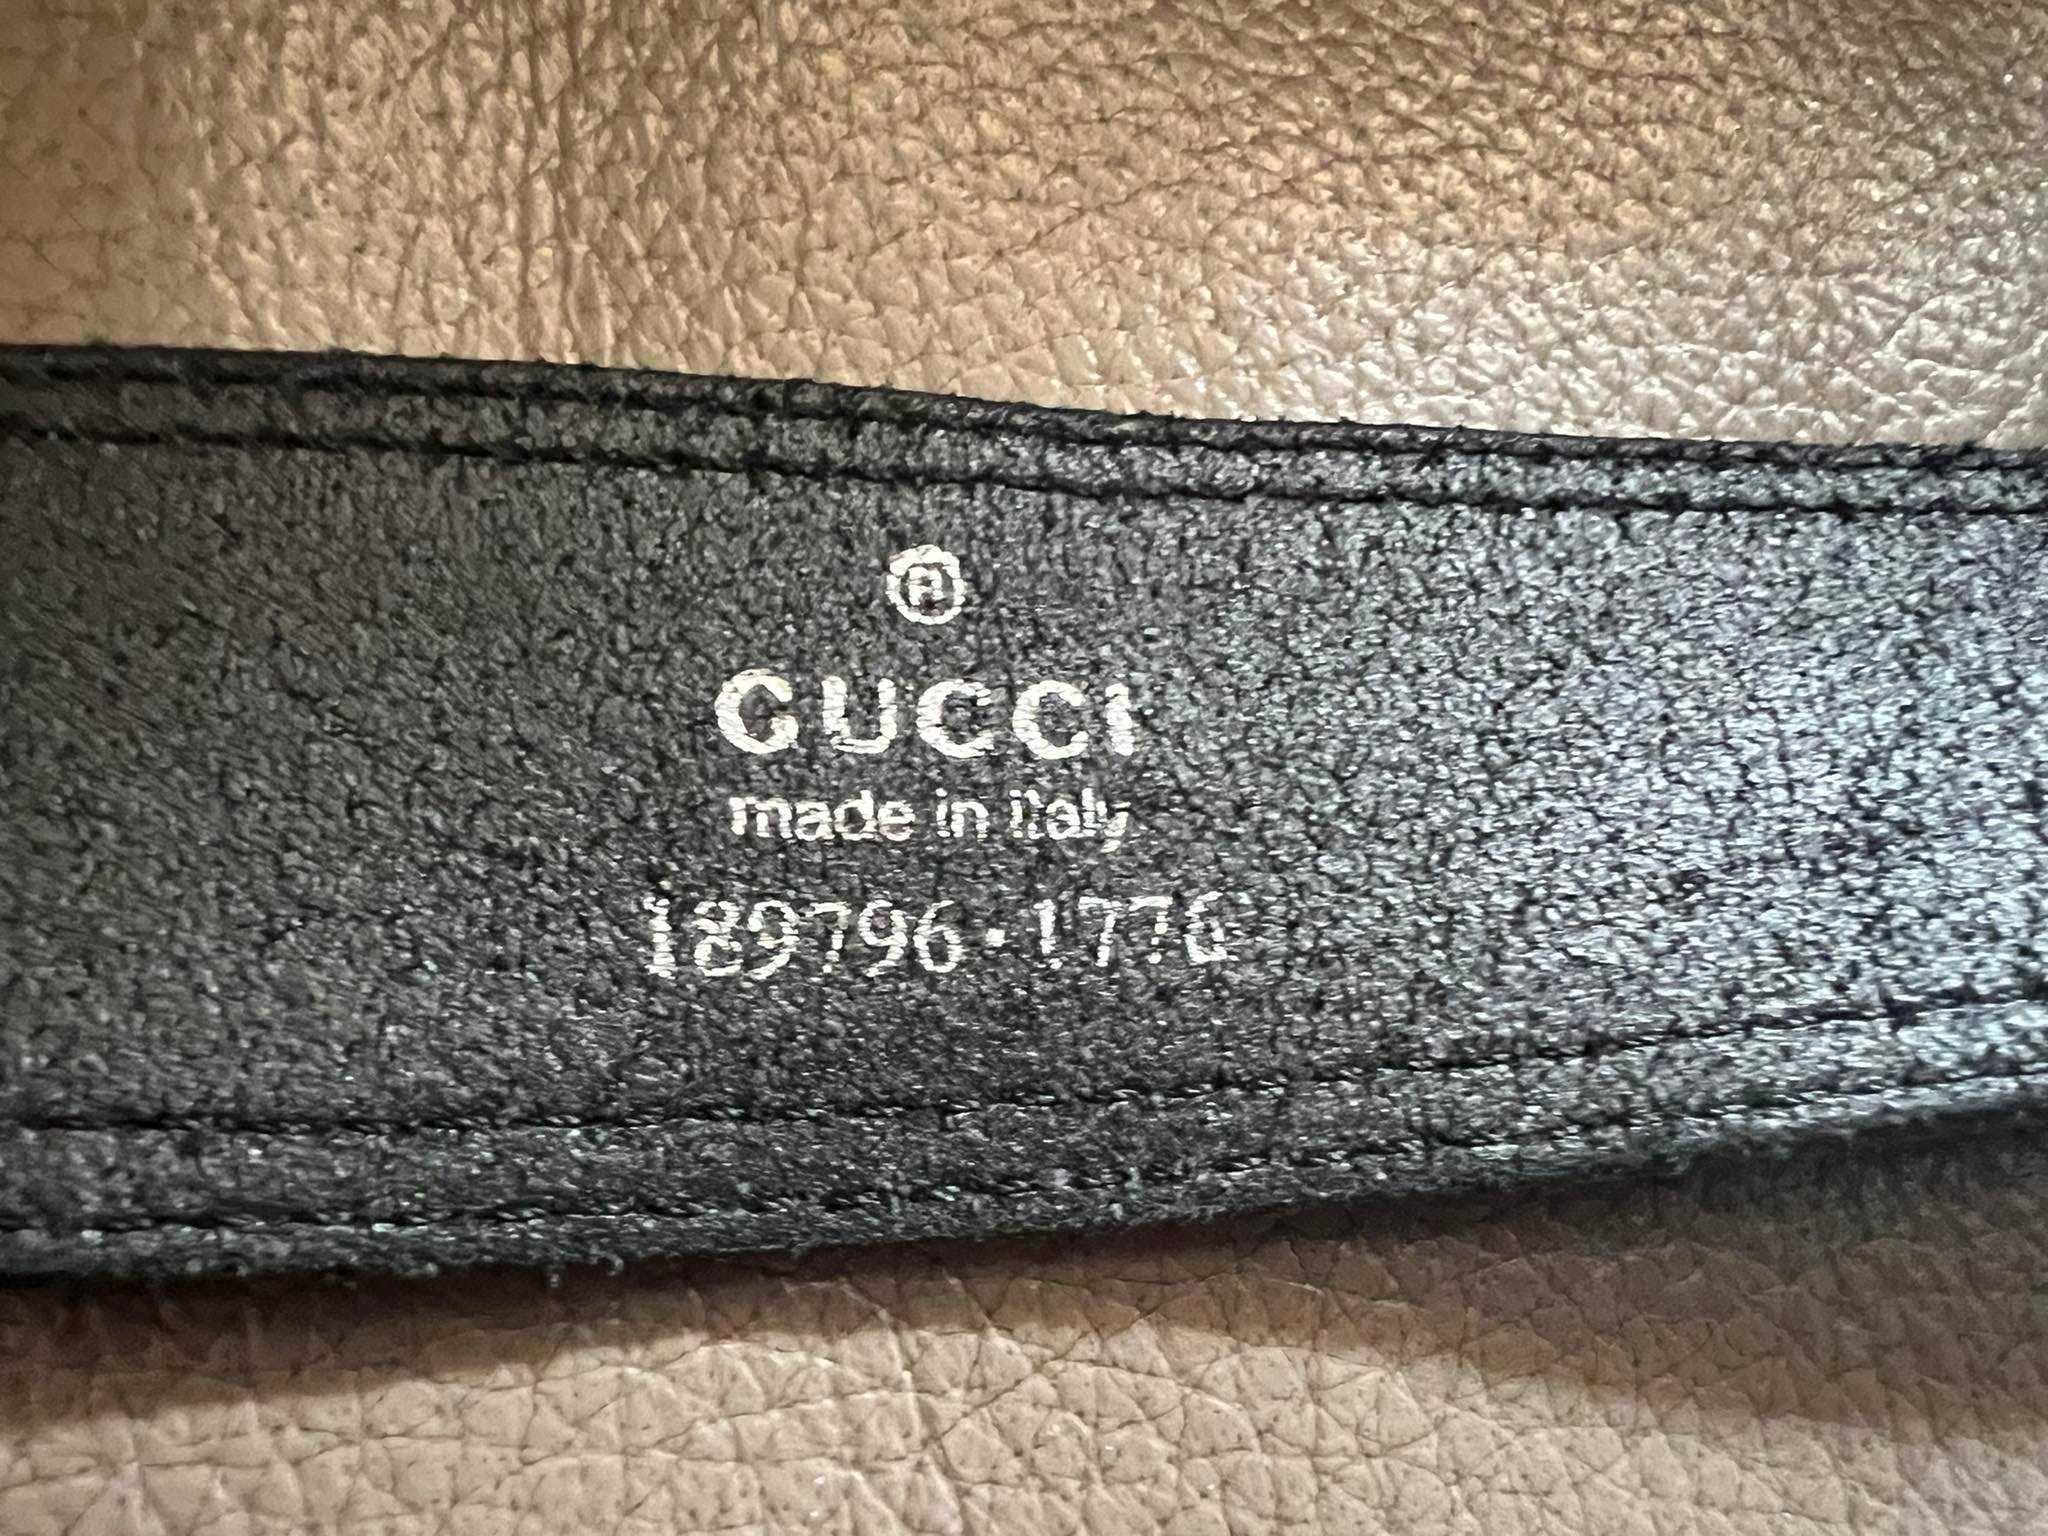 Pasek męski Gucci 120 (189796.1776) oryginalny